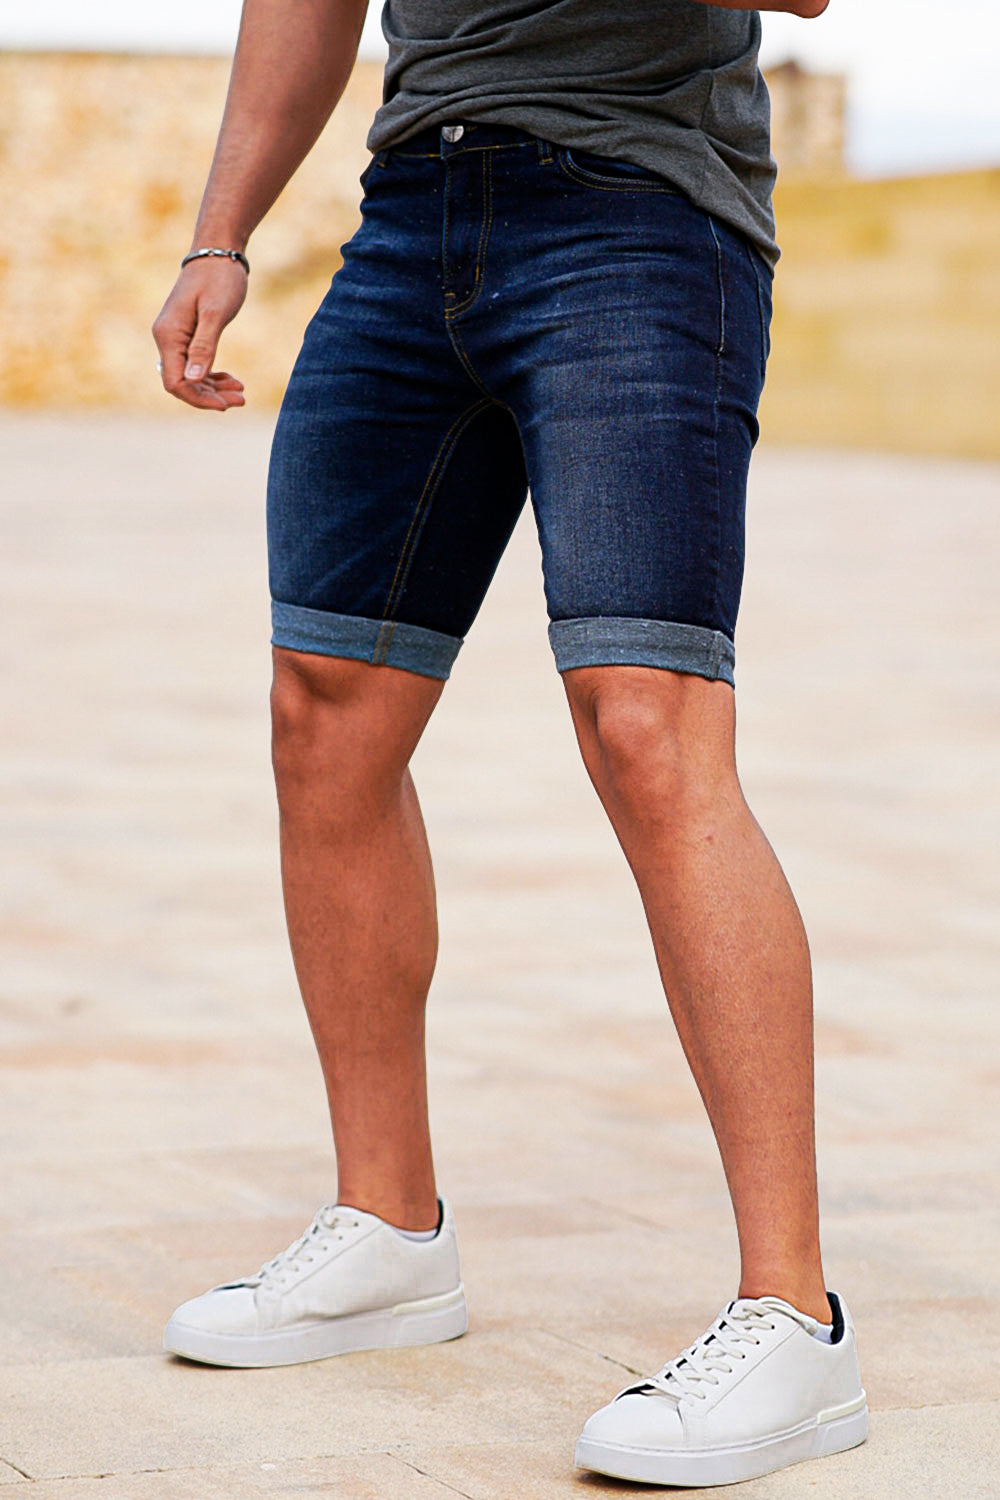 men's dark blue denim shorts